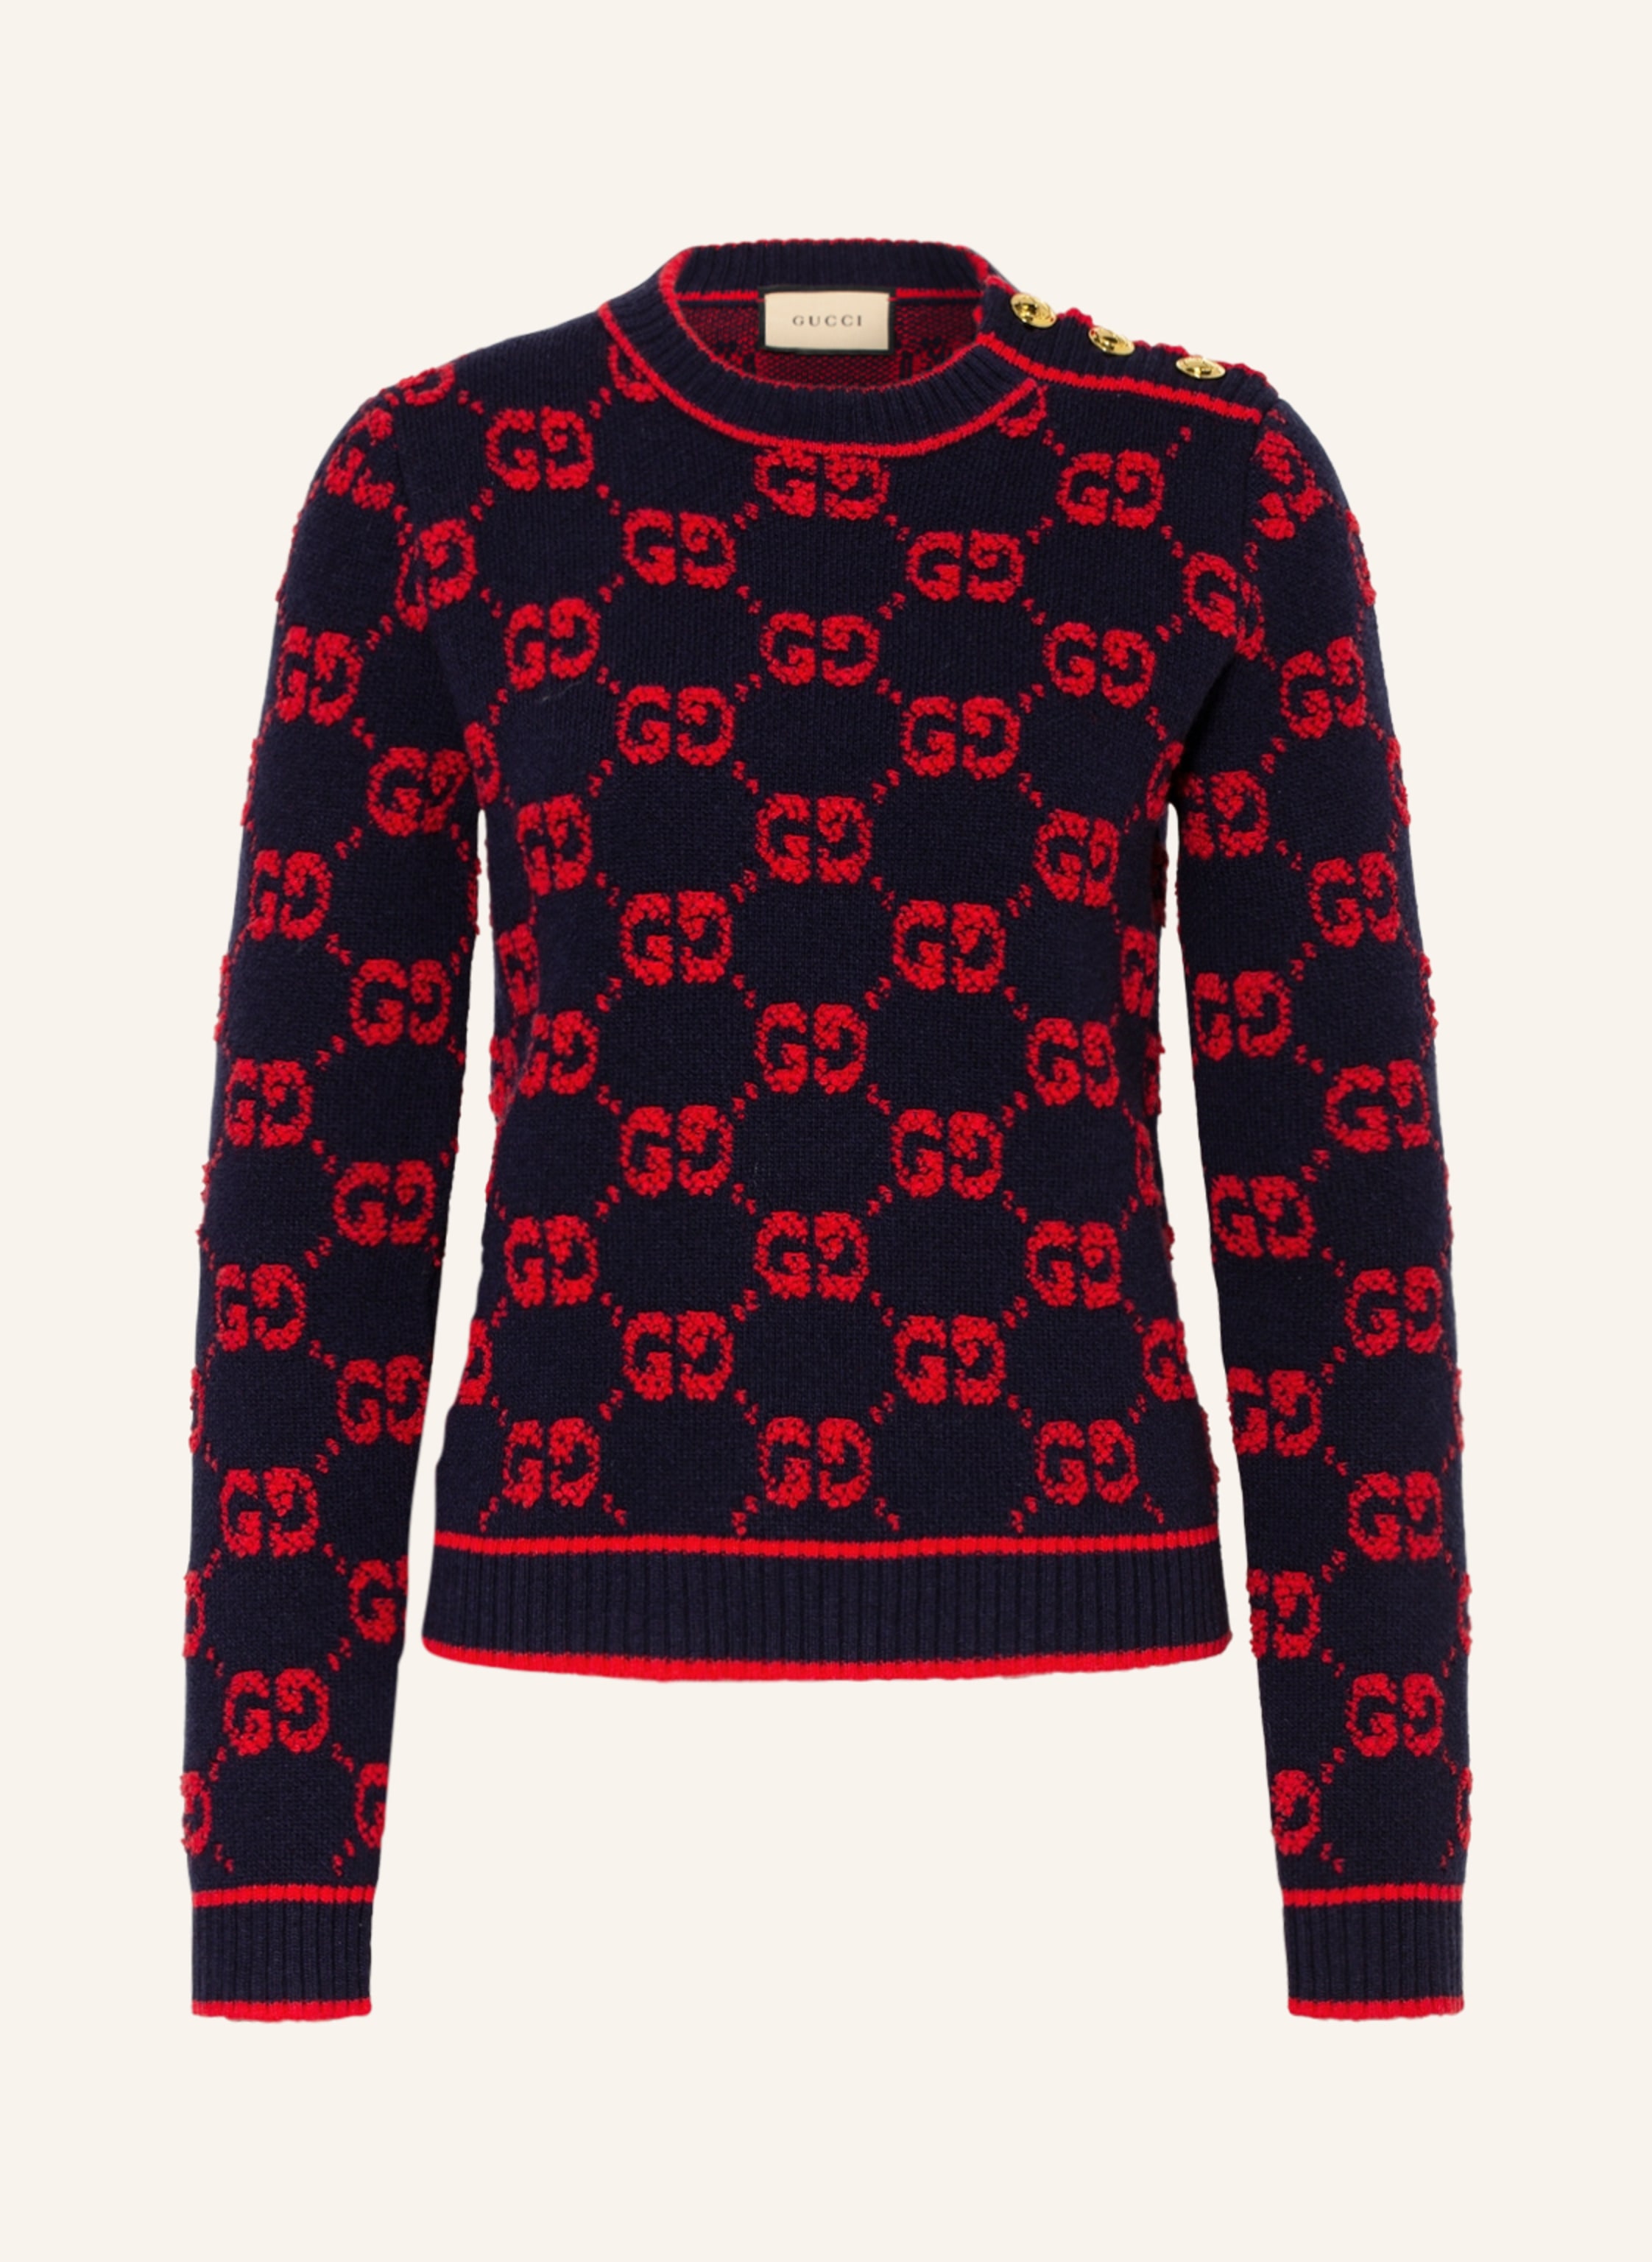 GUCCI Sweater in dark blue/ red | Breuninger